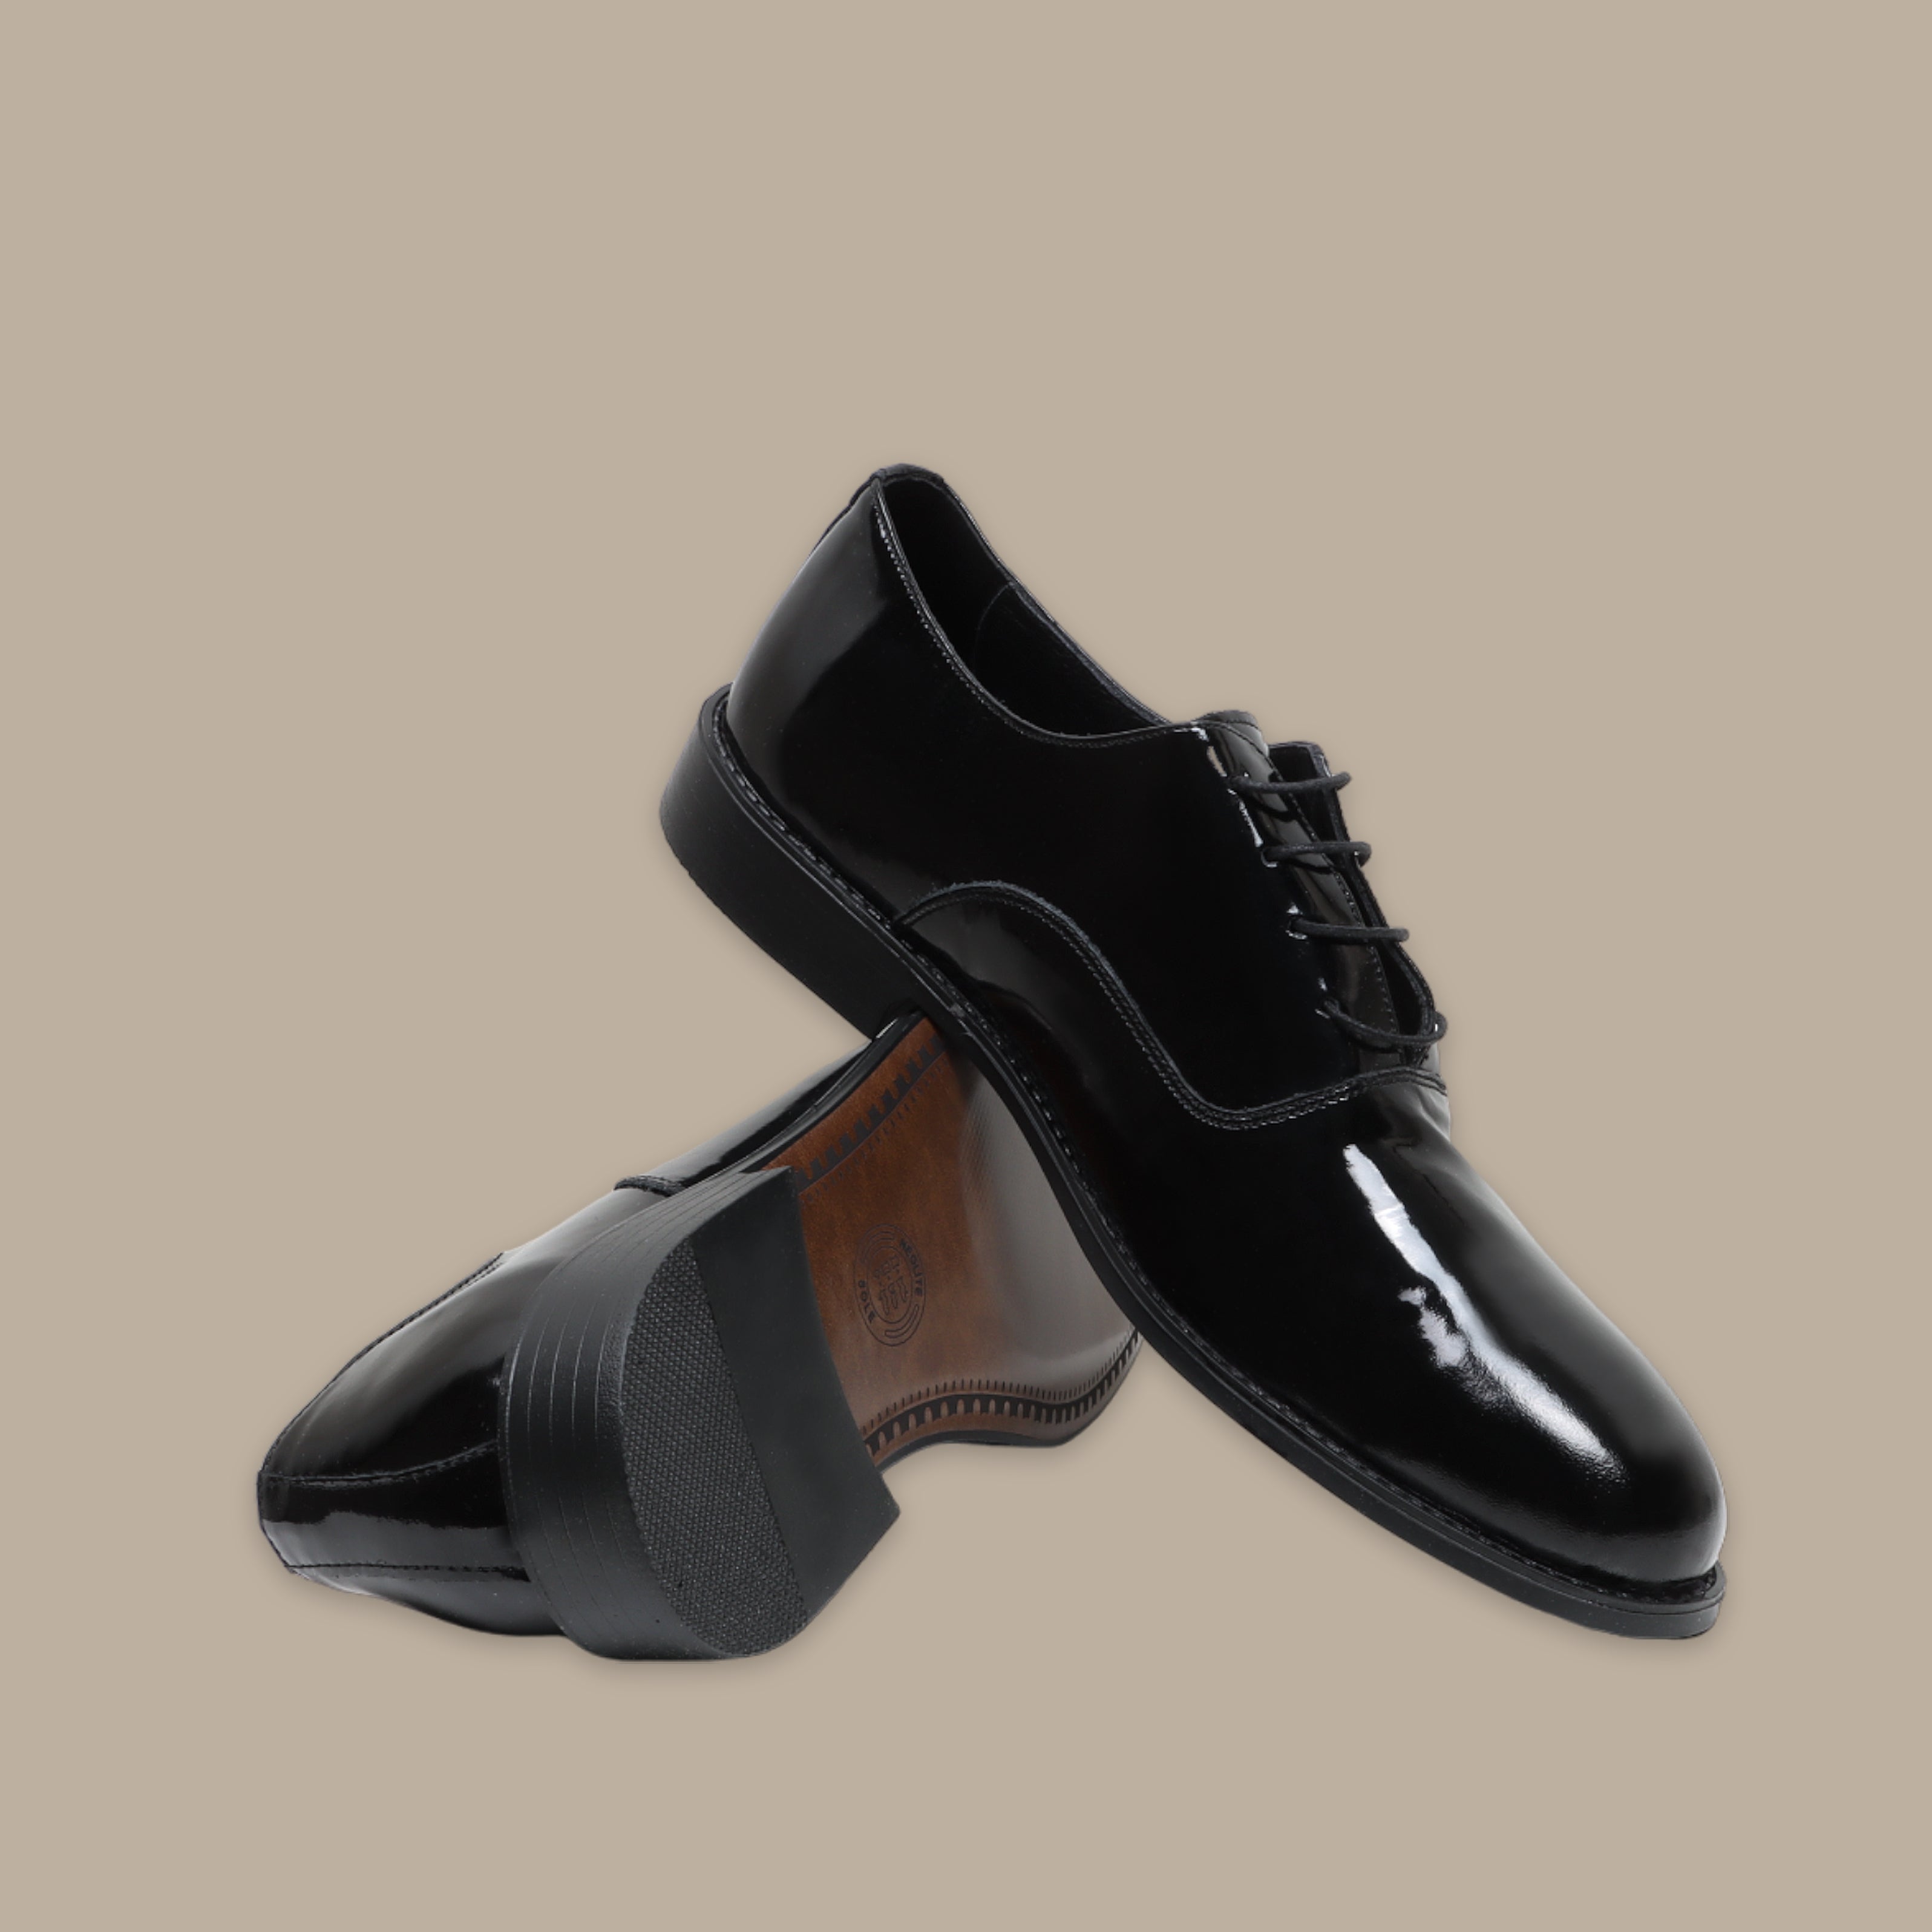 Shoes Tuxedo Shinny Detail | Black